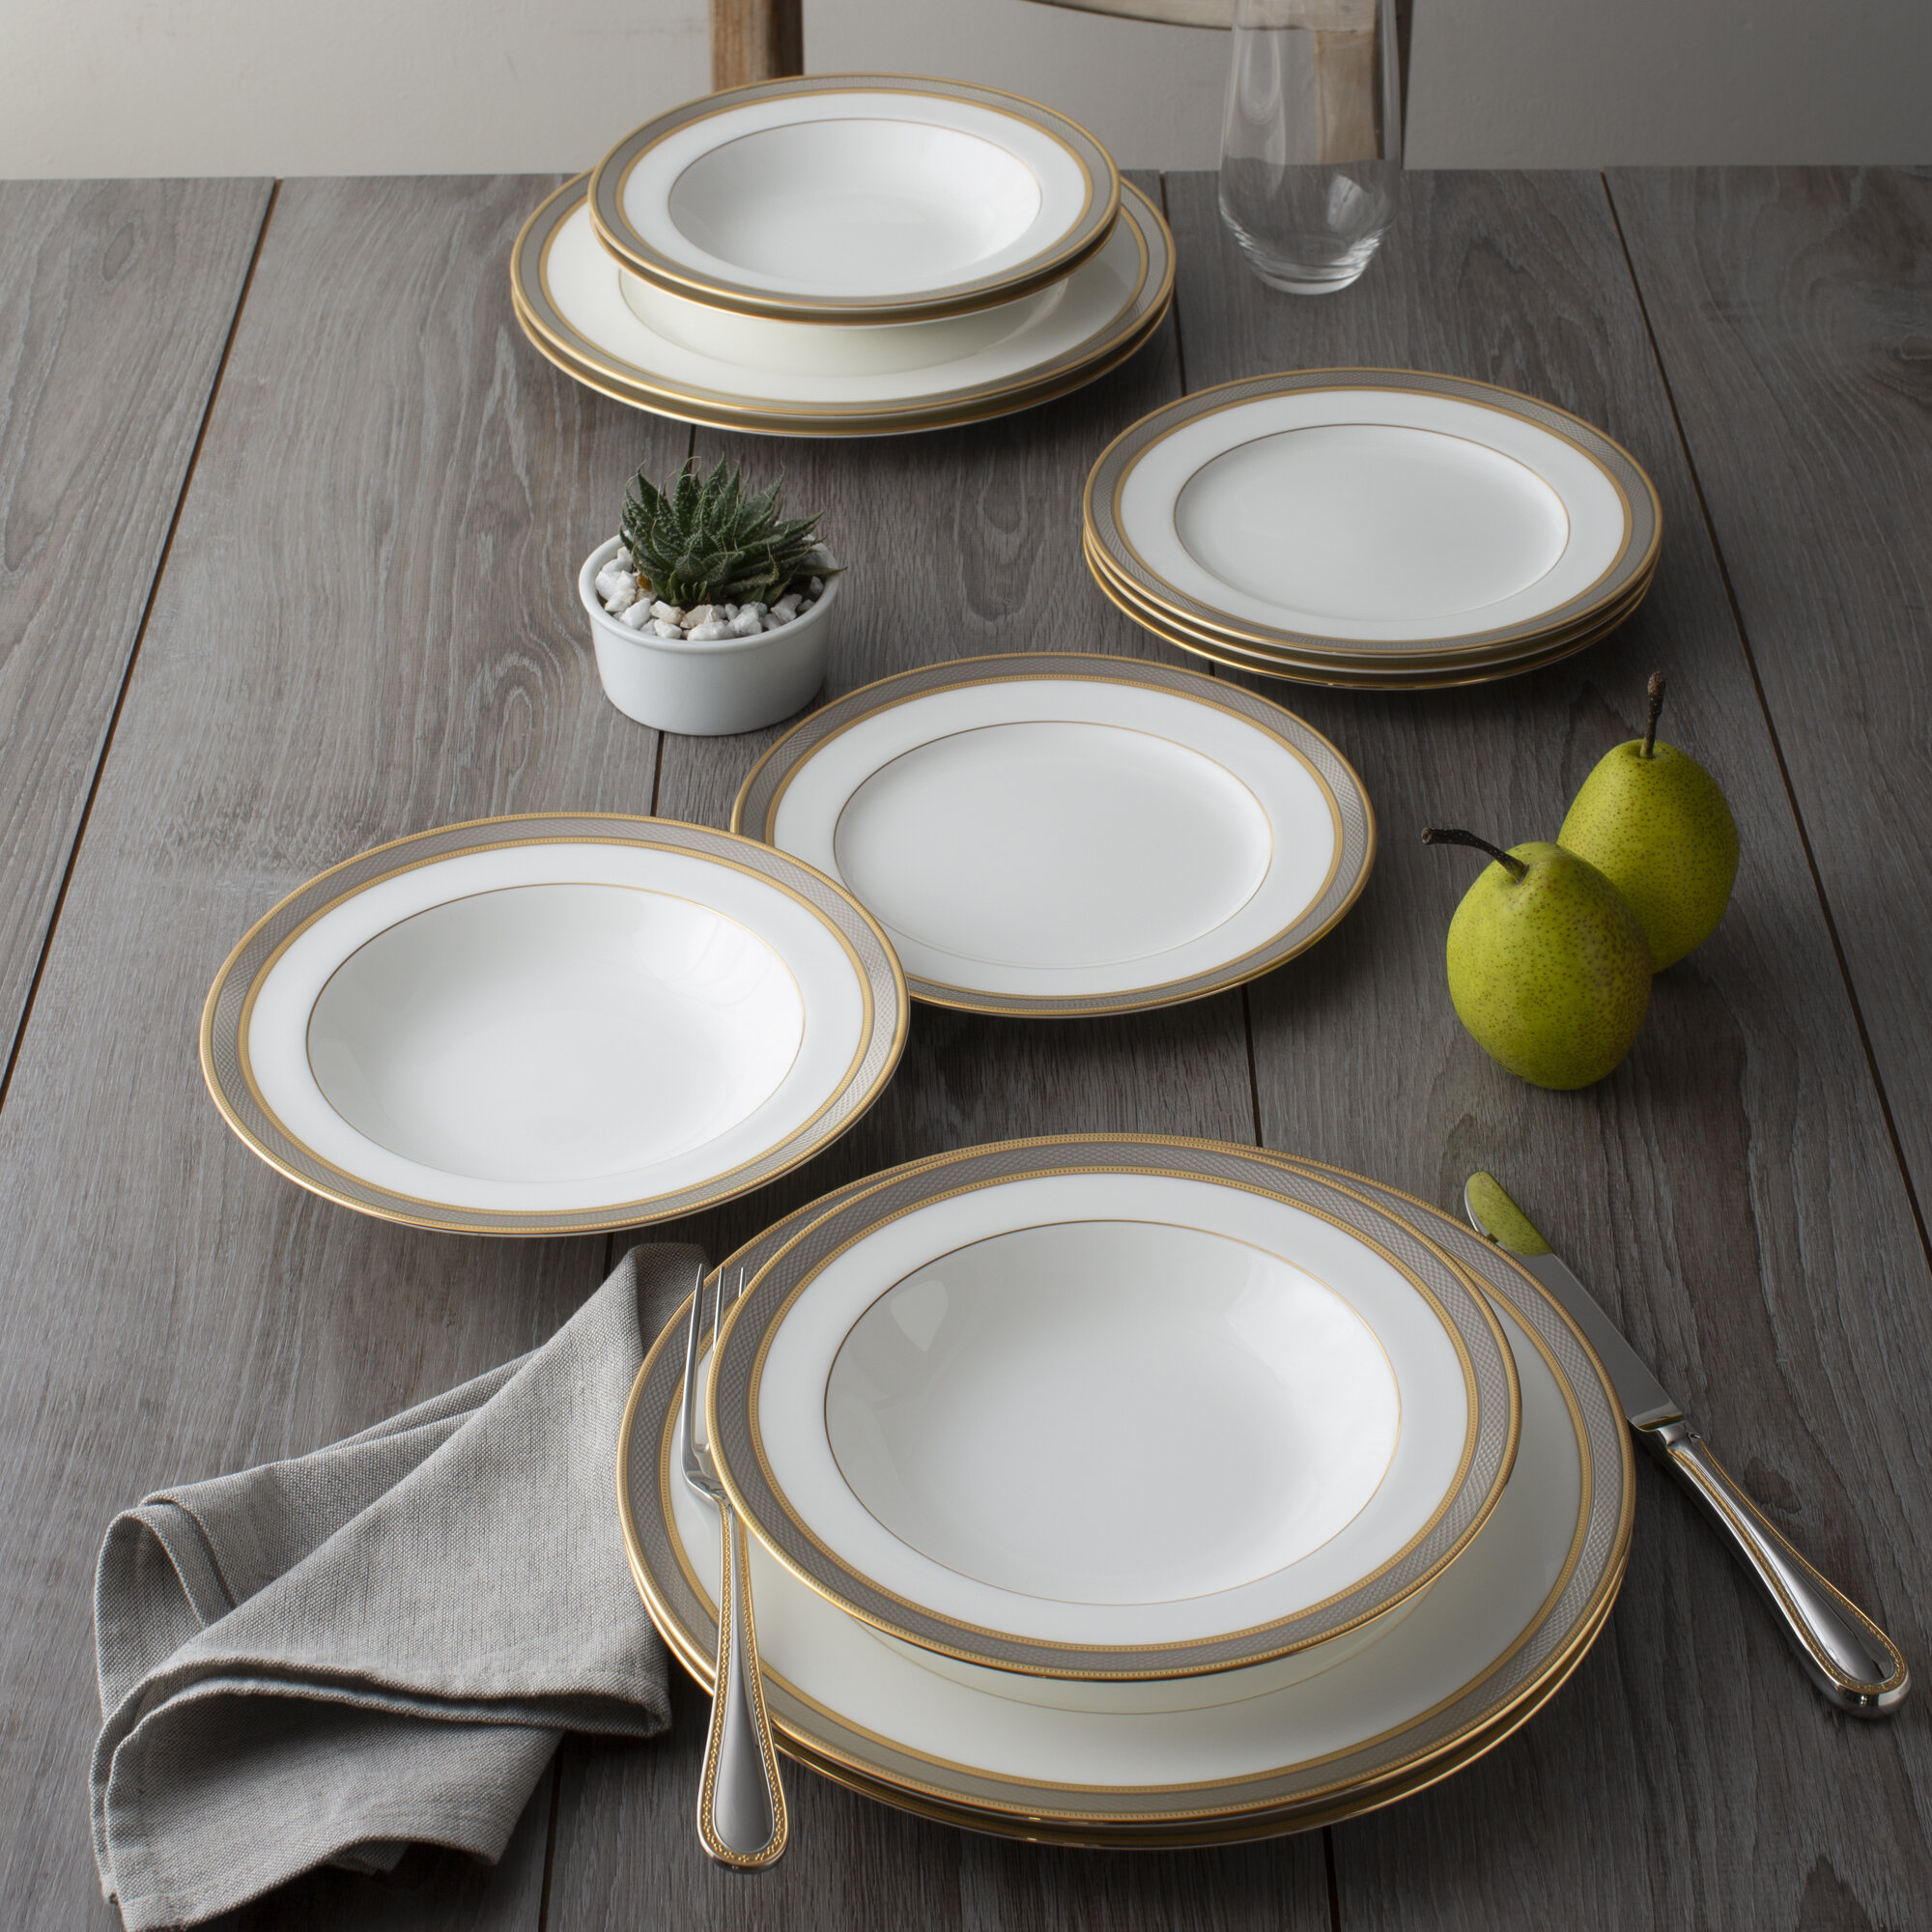 Pokini Reactive Glaze Dinnerware Sets, 12 Piece Luxury Bone China Dishware  Sets, Gilt Rim Plates and Bowls Sets for 4